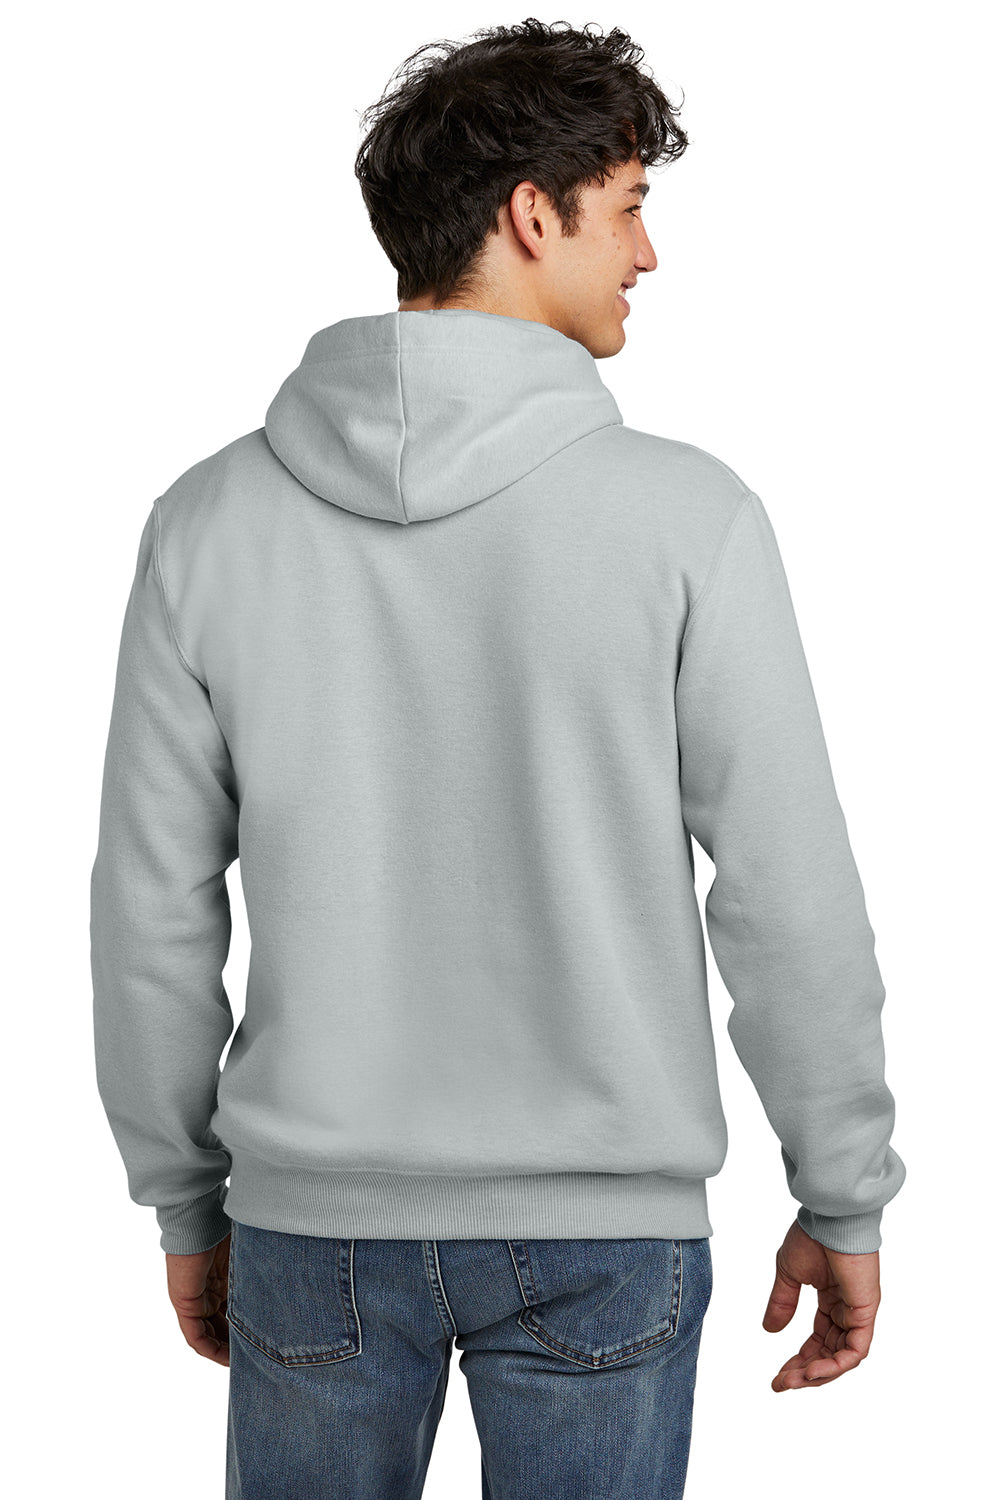 Jerzees 700M Mens Eco Premium Hooded Sweatshirt Hoodie Heather Frost Grey Back